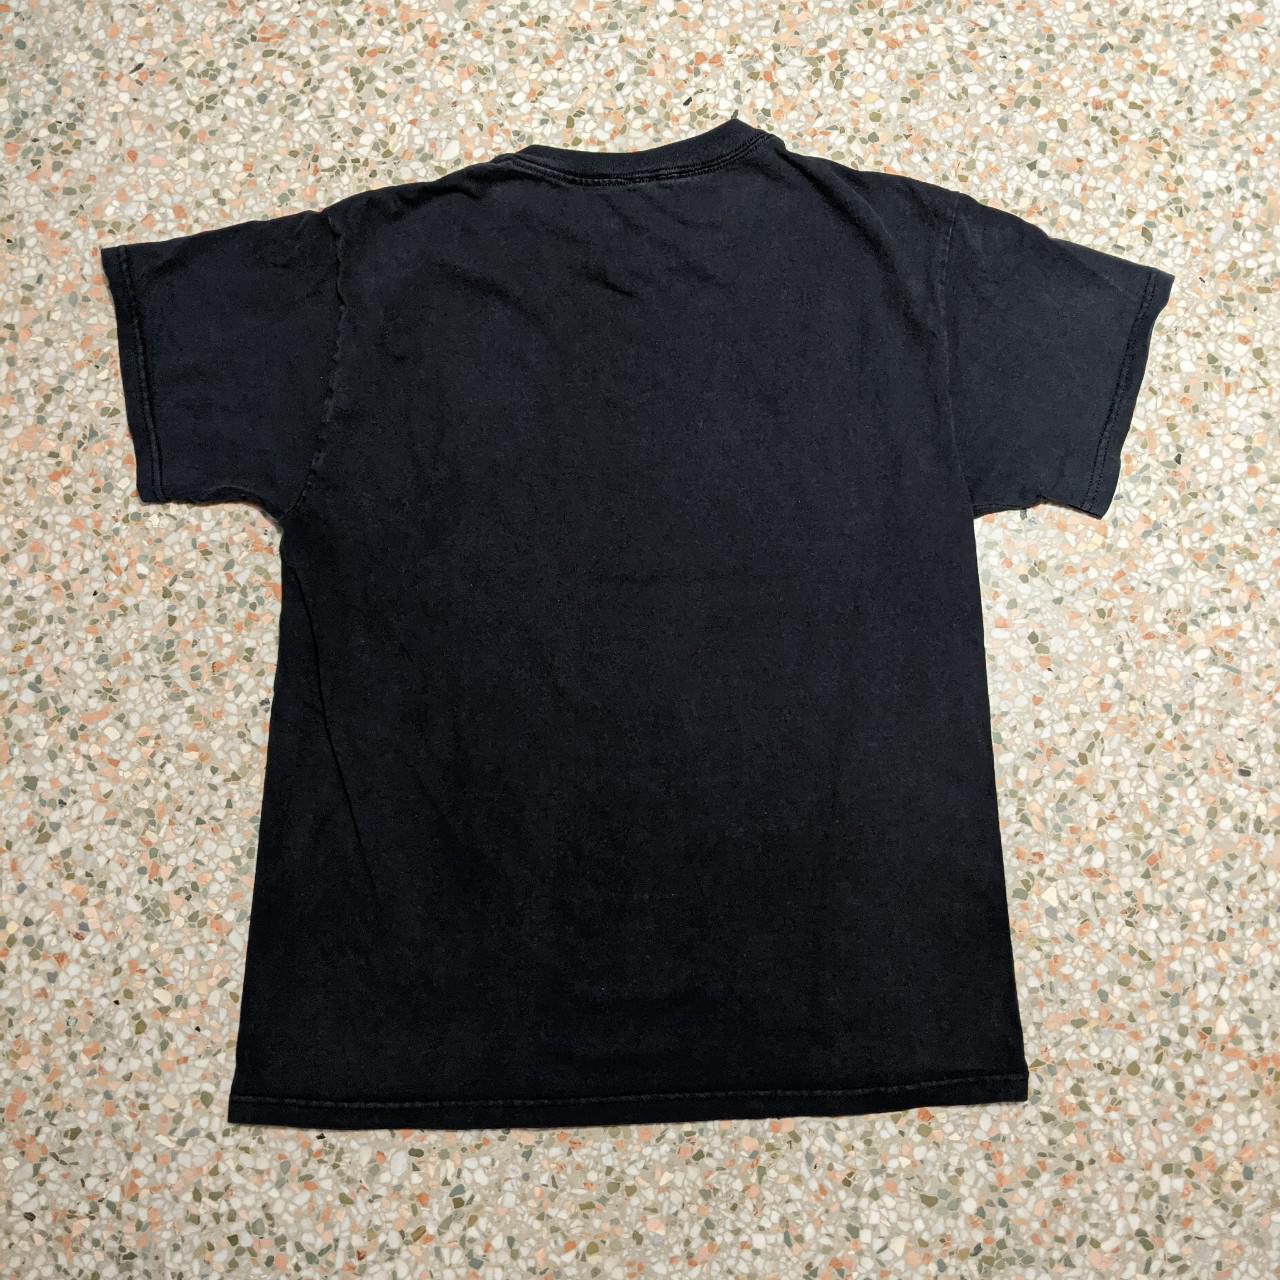 Product Image 2 - Adolescents vintage 2004 shirt, size